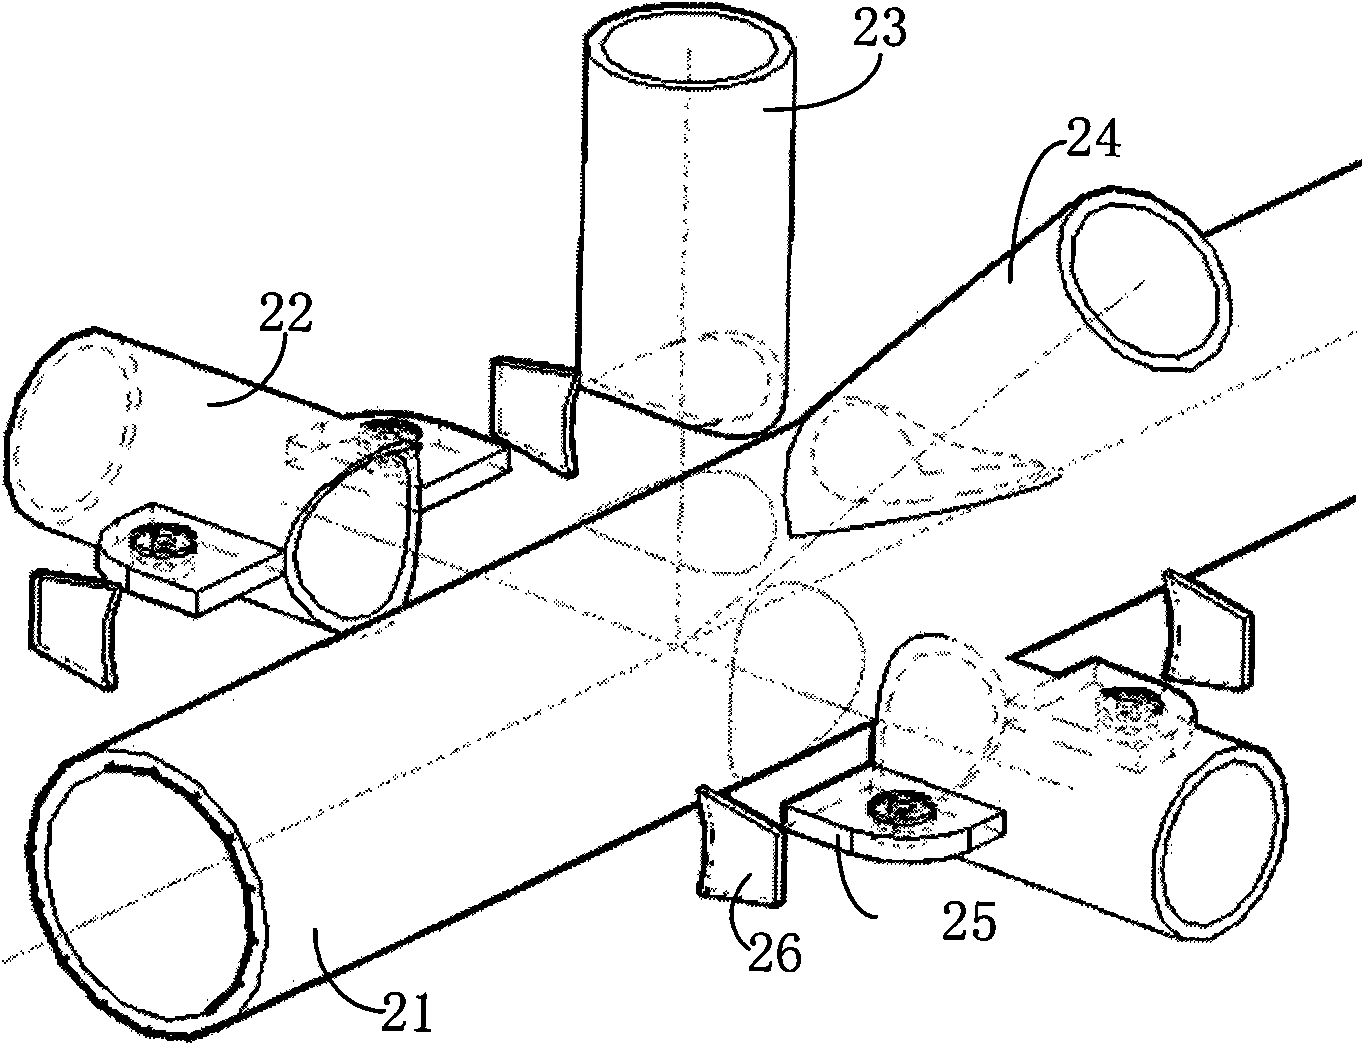 Manufacturing method of multi-pipe tubular joint